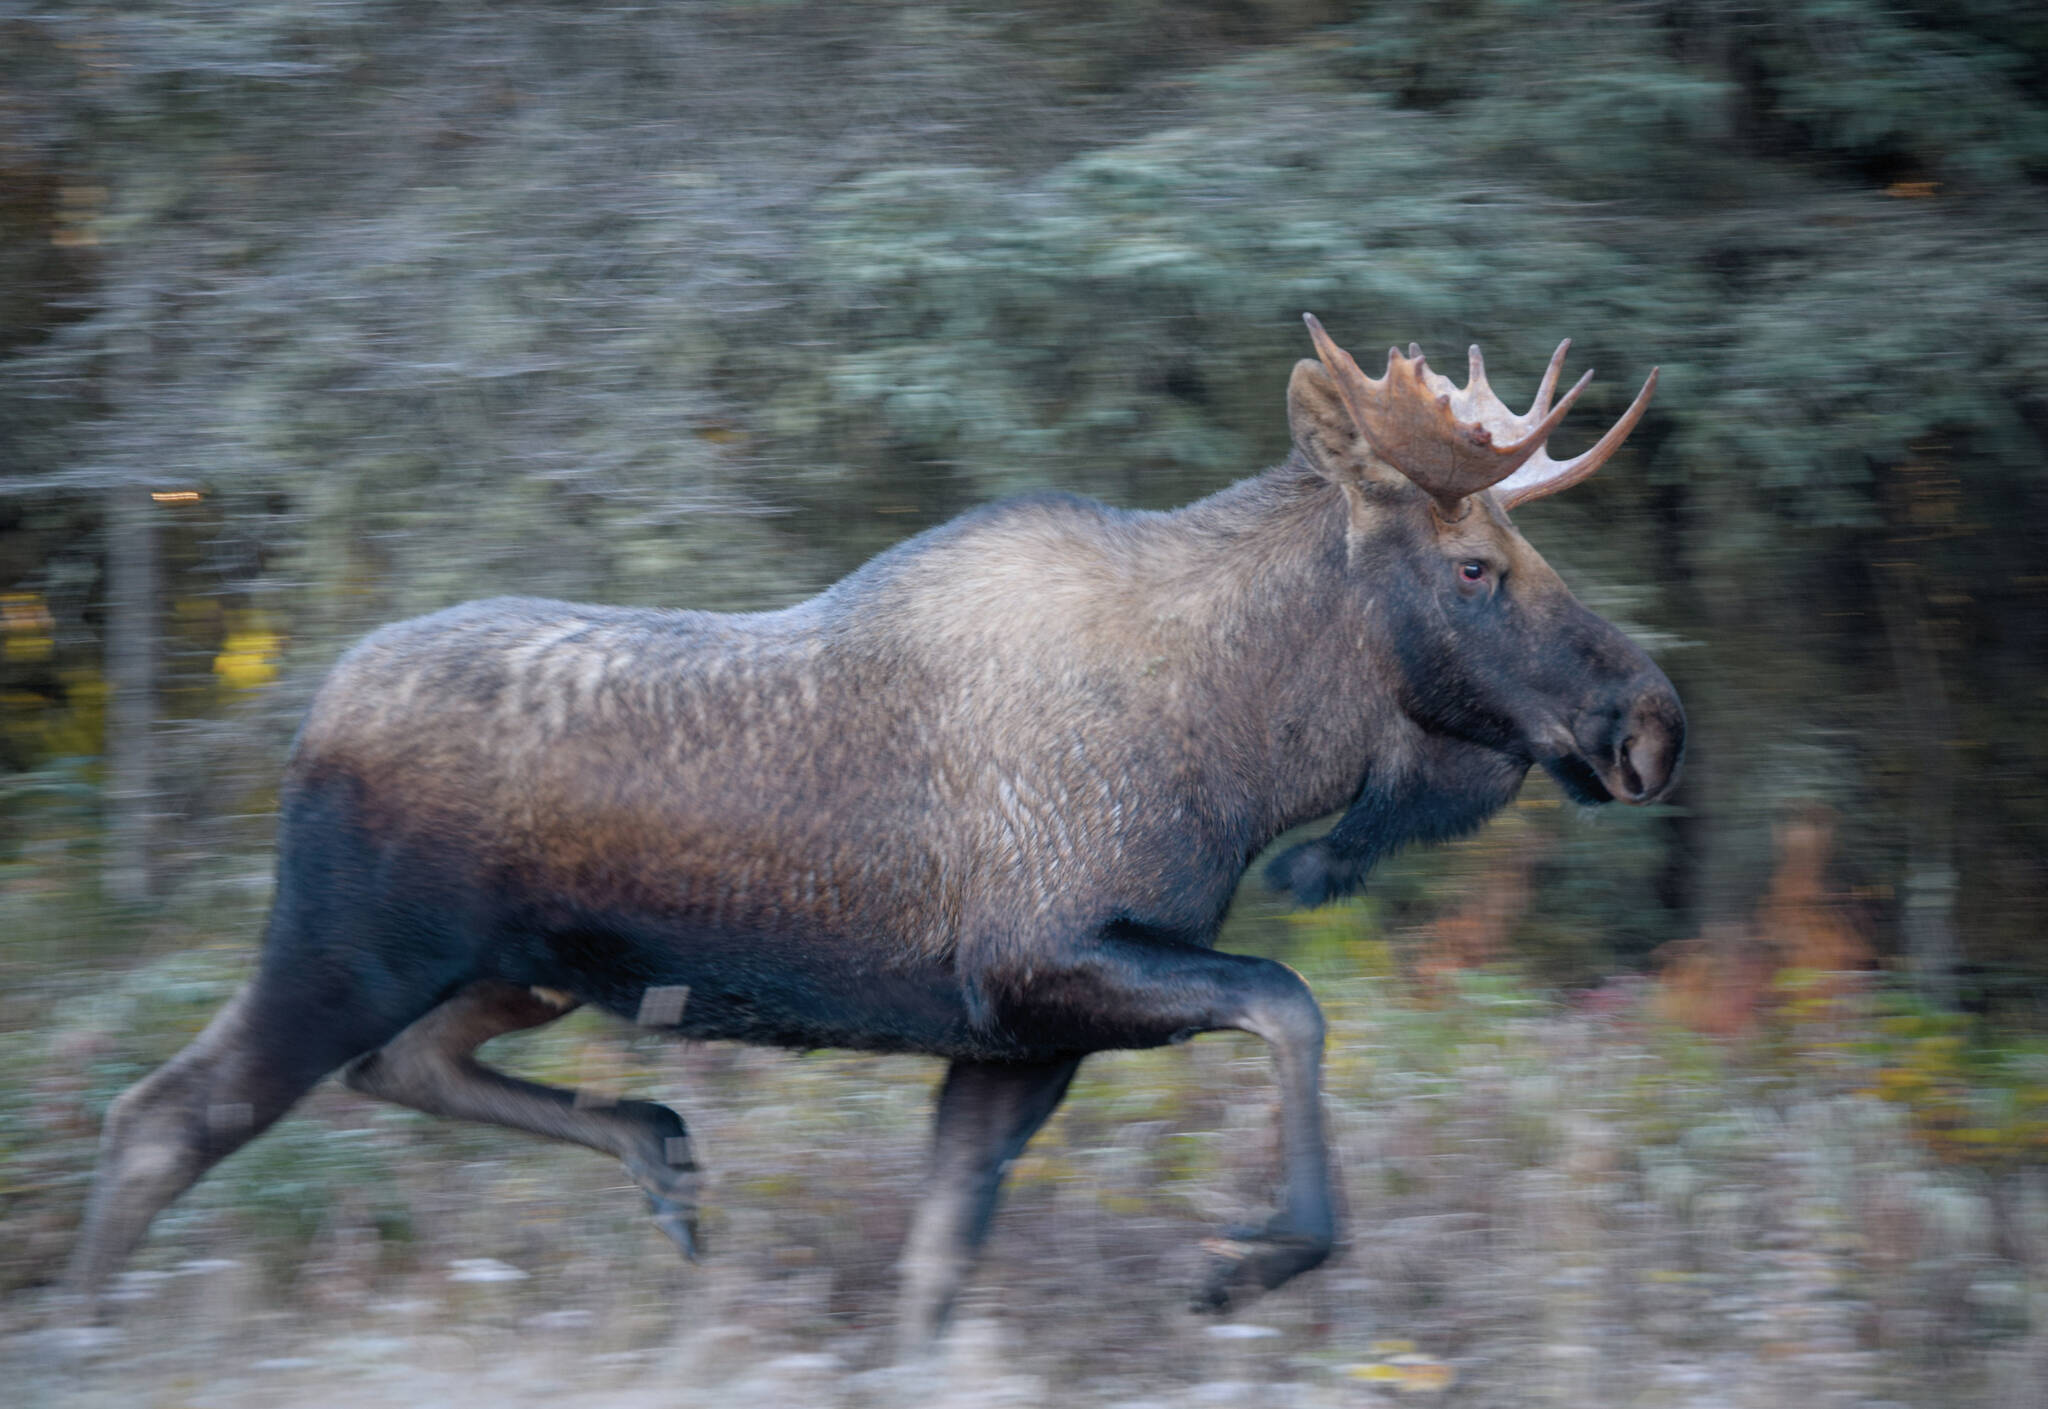 A moose darts into the forest on Beaver Loop Road in Kenai, Alaska, during the Kenai River Marathon on Sunday, Sept. 26, 2021. (Photo by Jeff Helminiak/Peninsula Clarion)